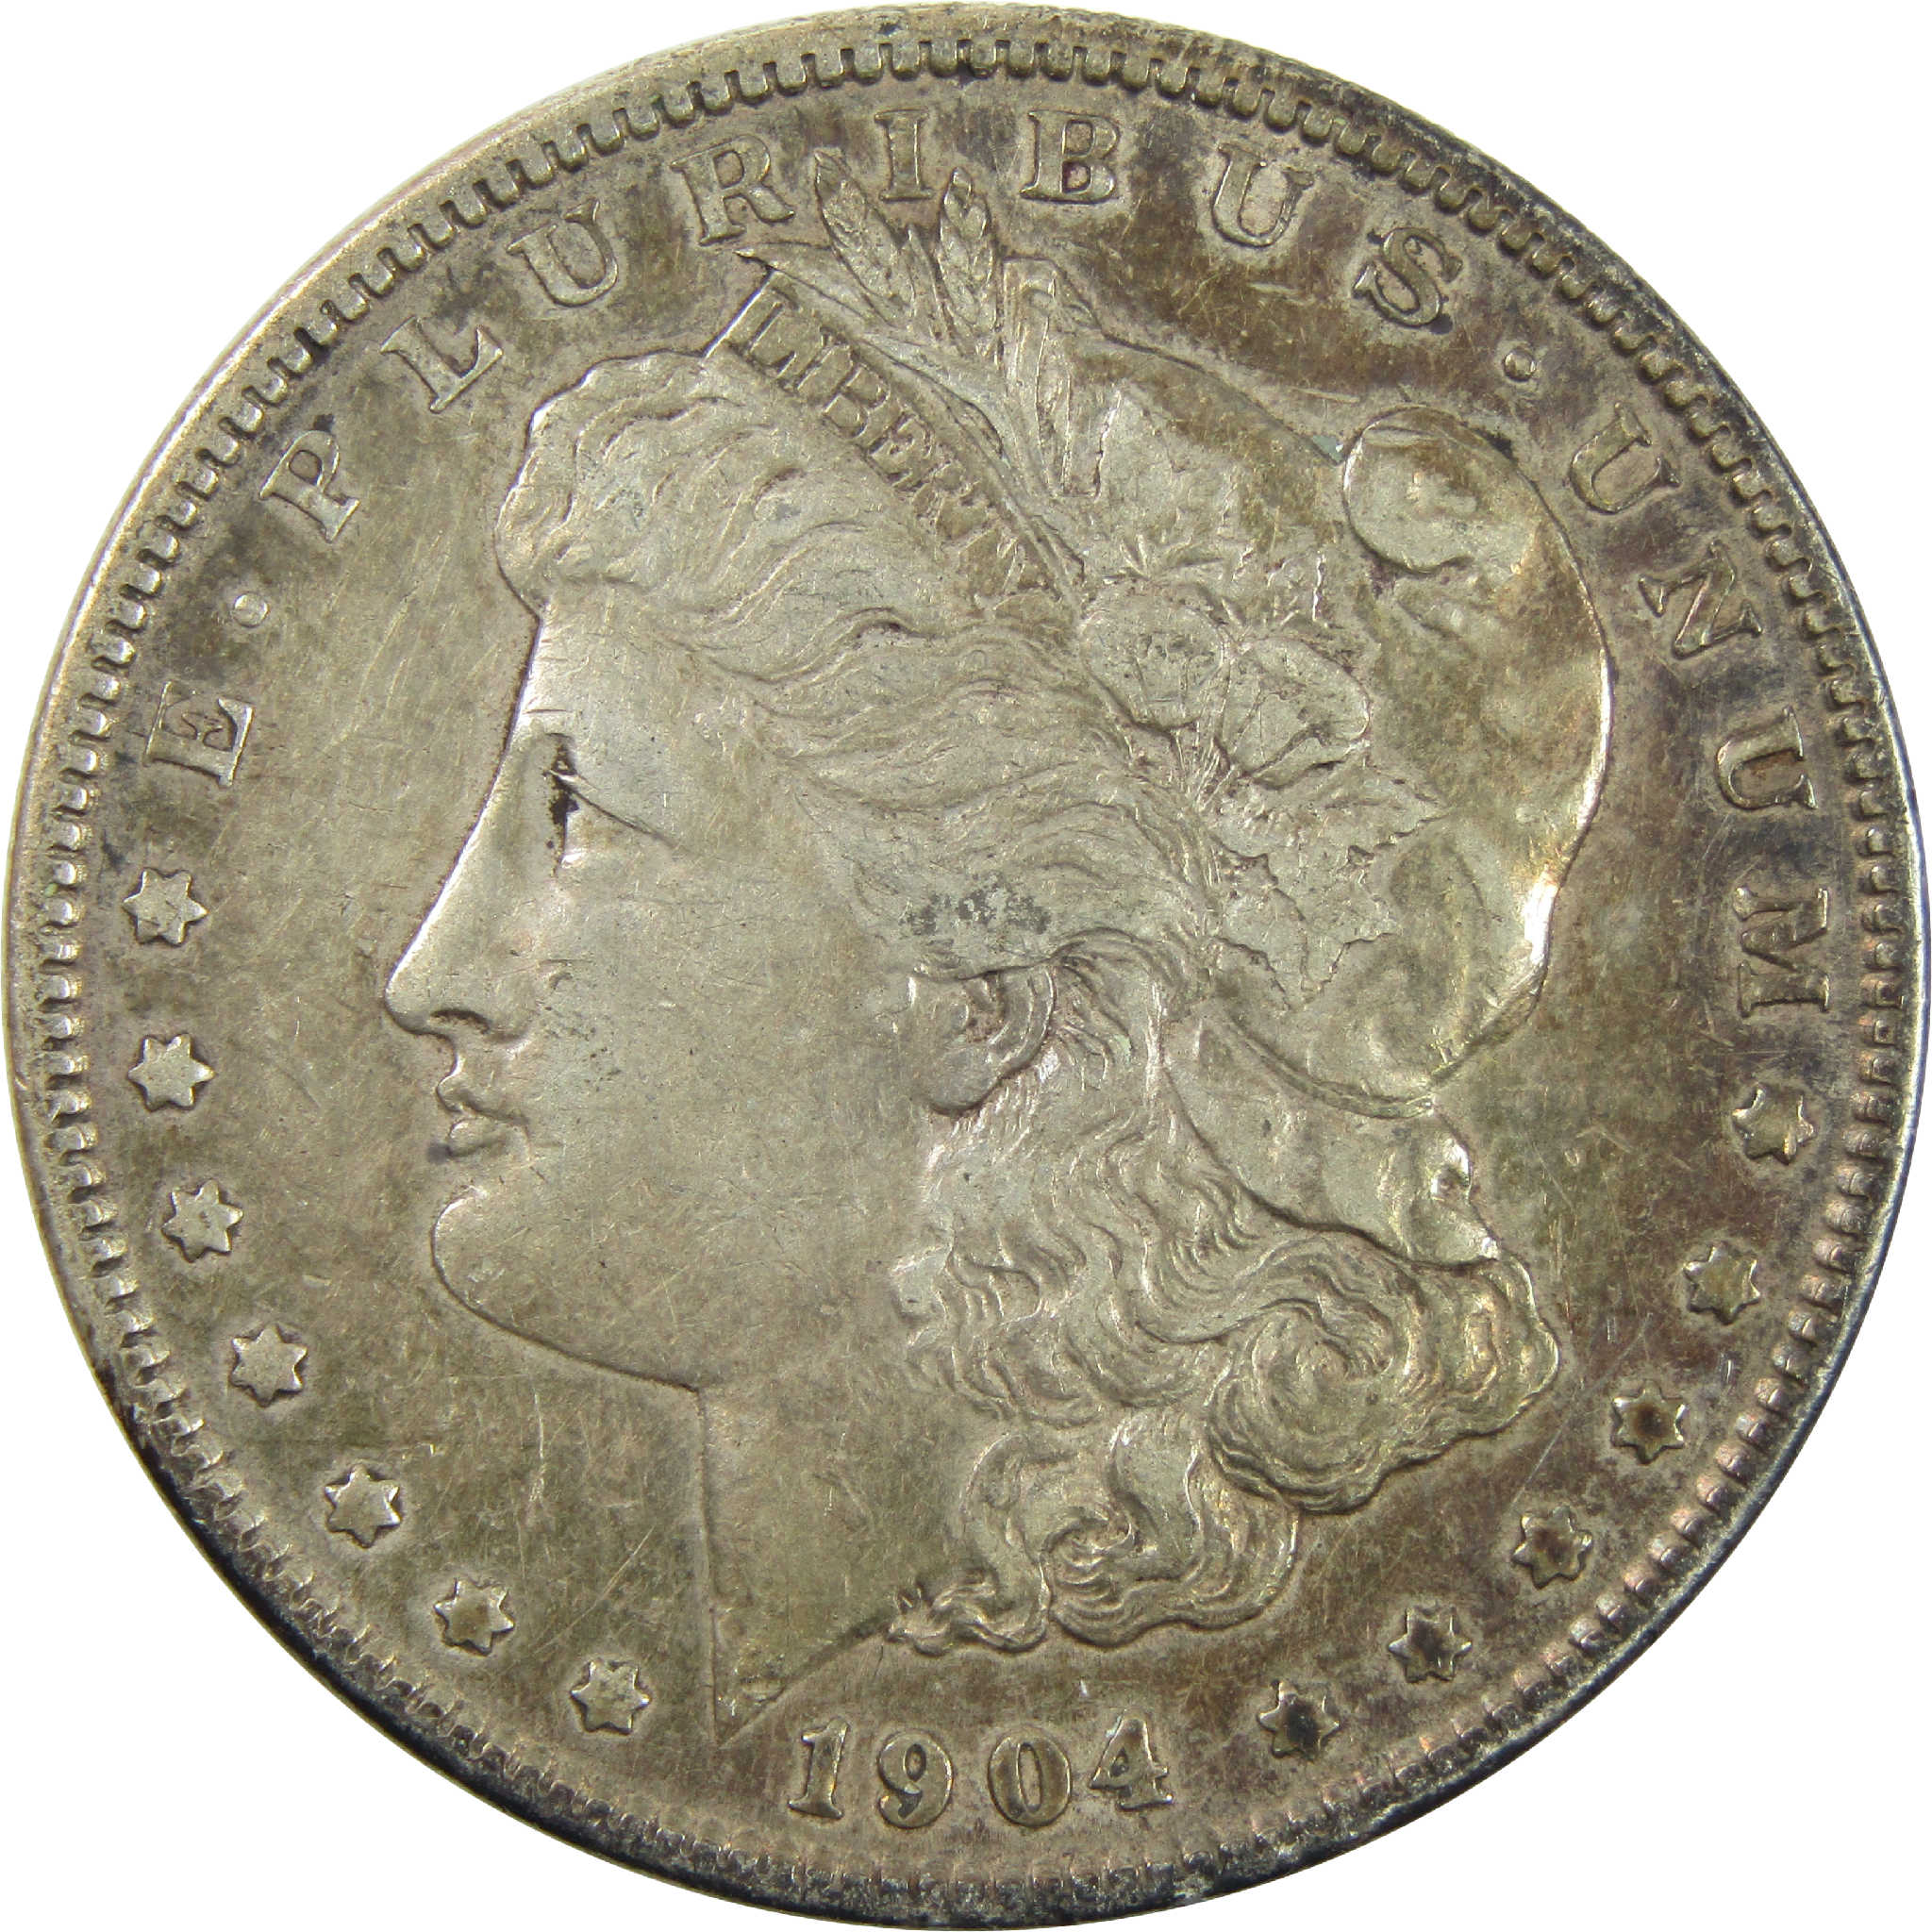 1904 Morgan Dollar VF Very Fine Silver $1 Coin SKU:I13505